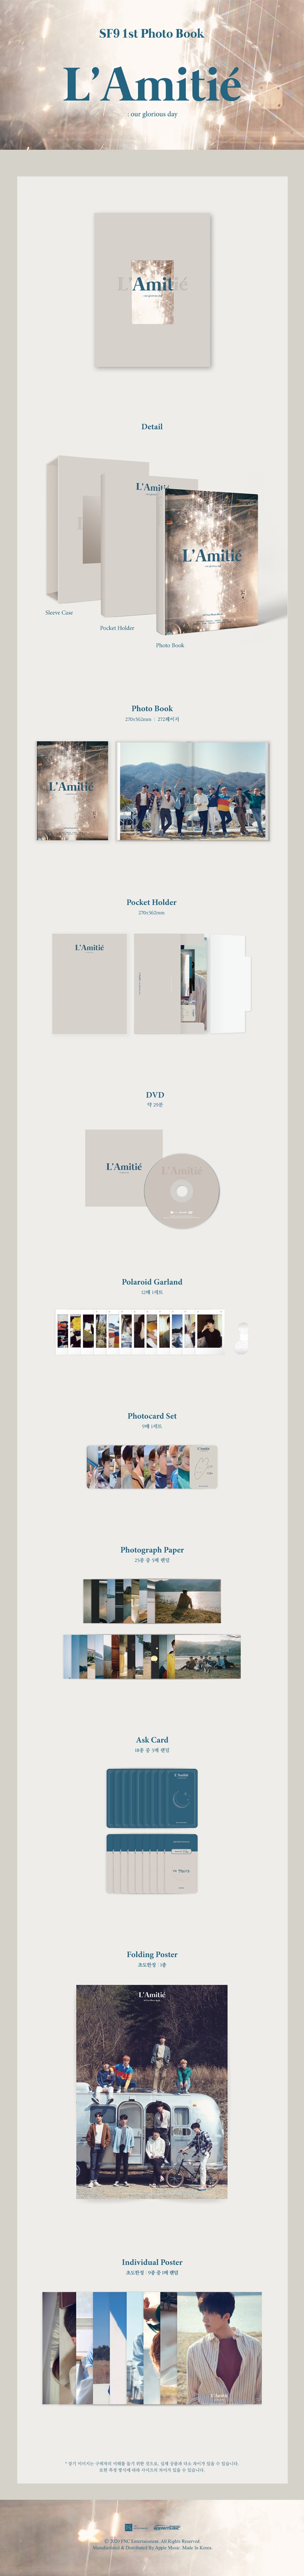 SF9 1st Photobook - L'Amitie – Choice Music LA